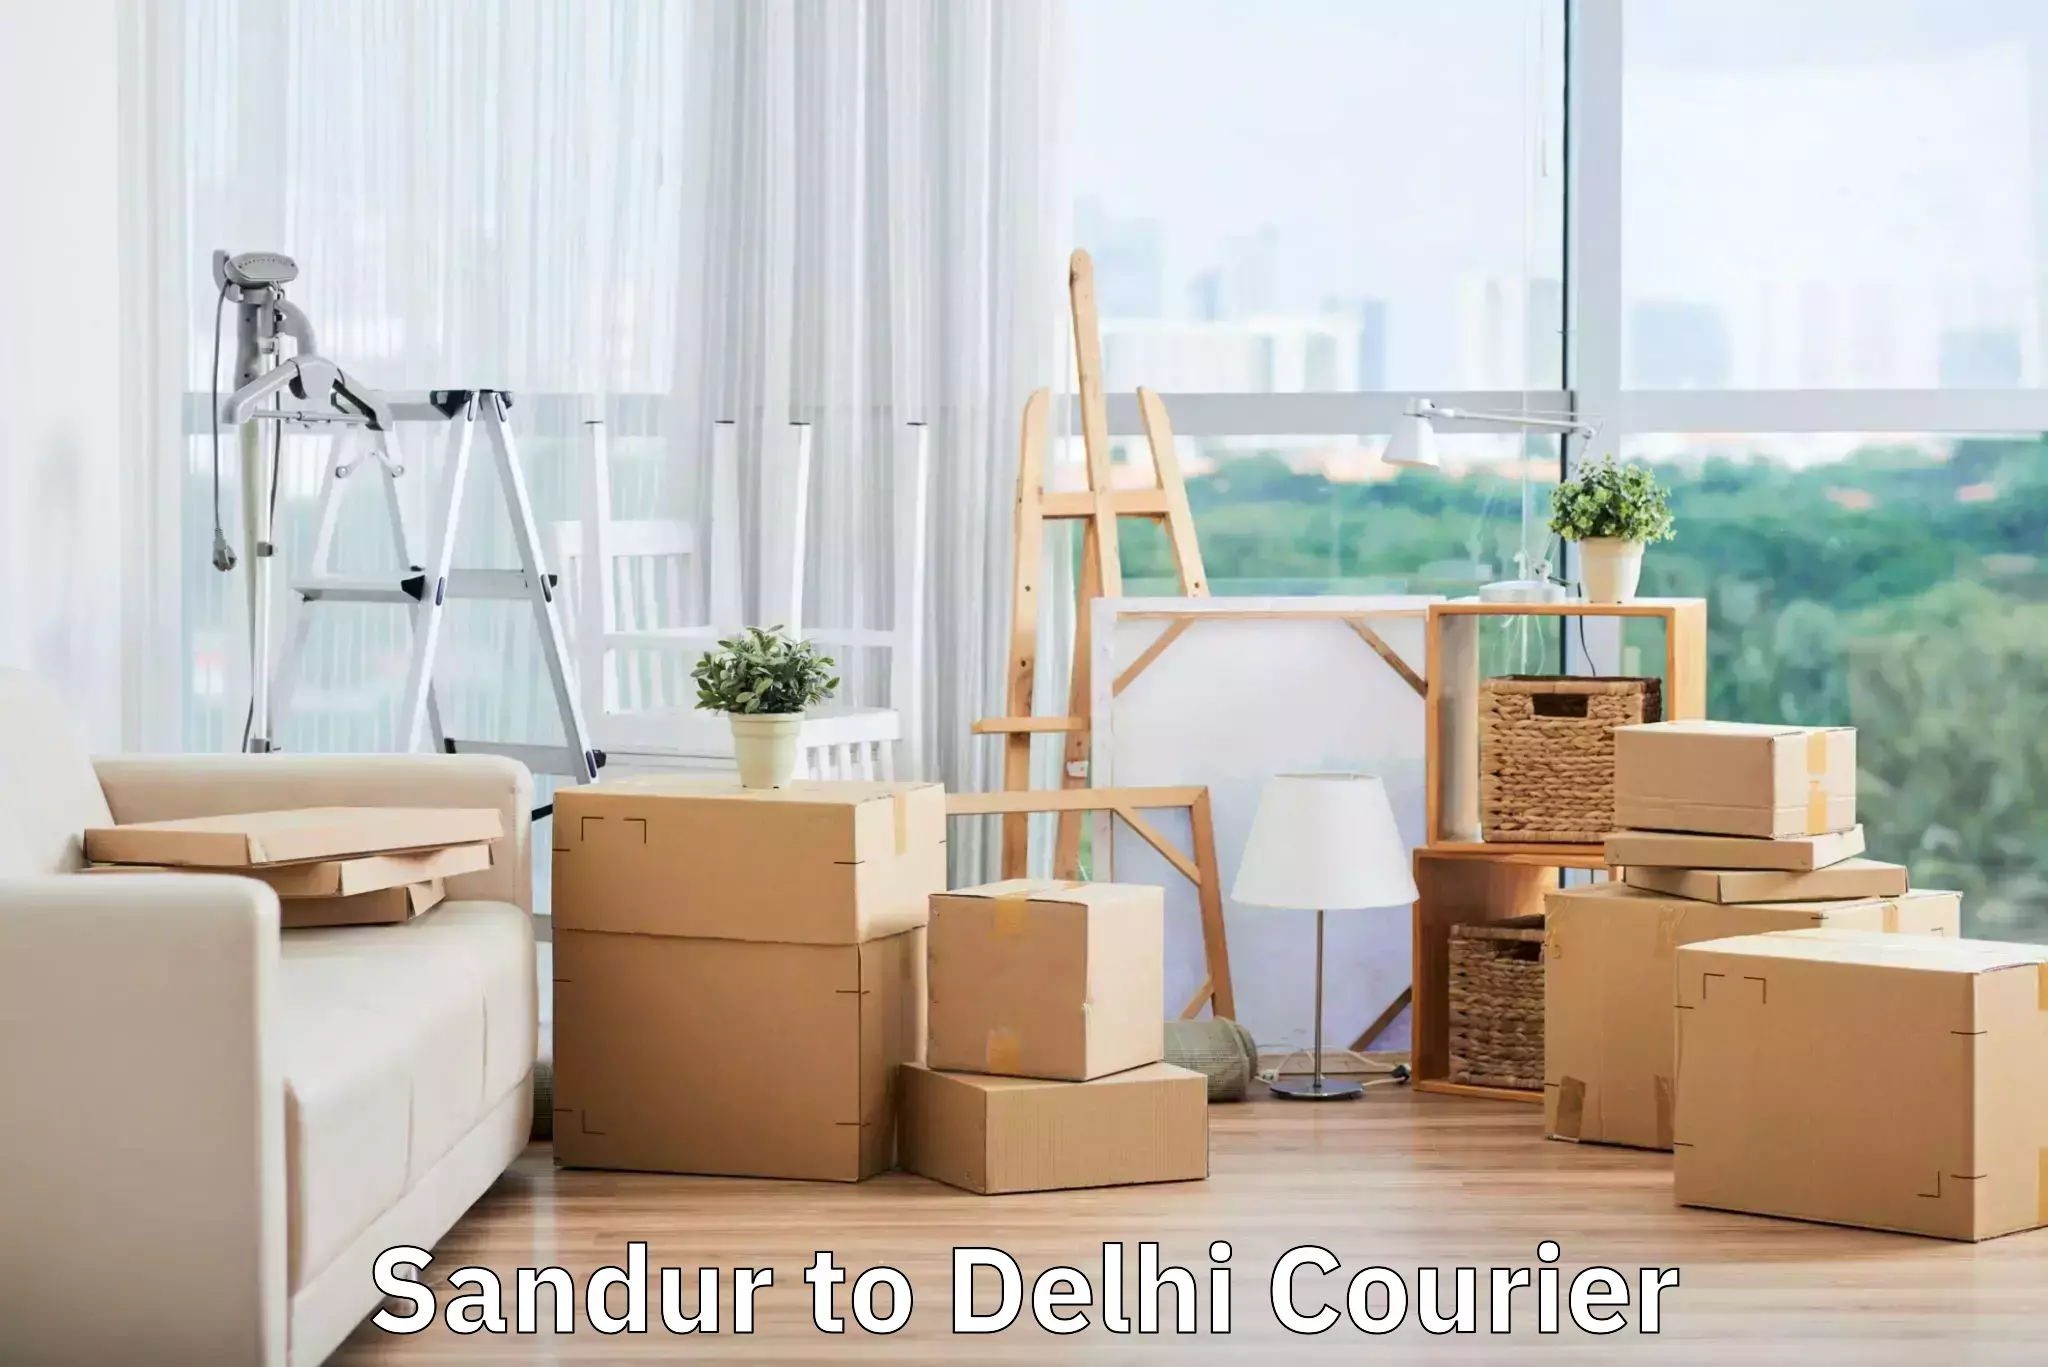 Airport luggage delivery Sandur to Delhi